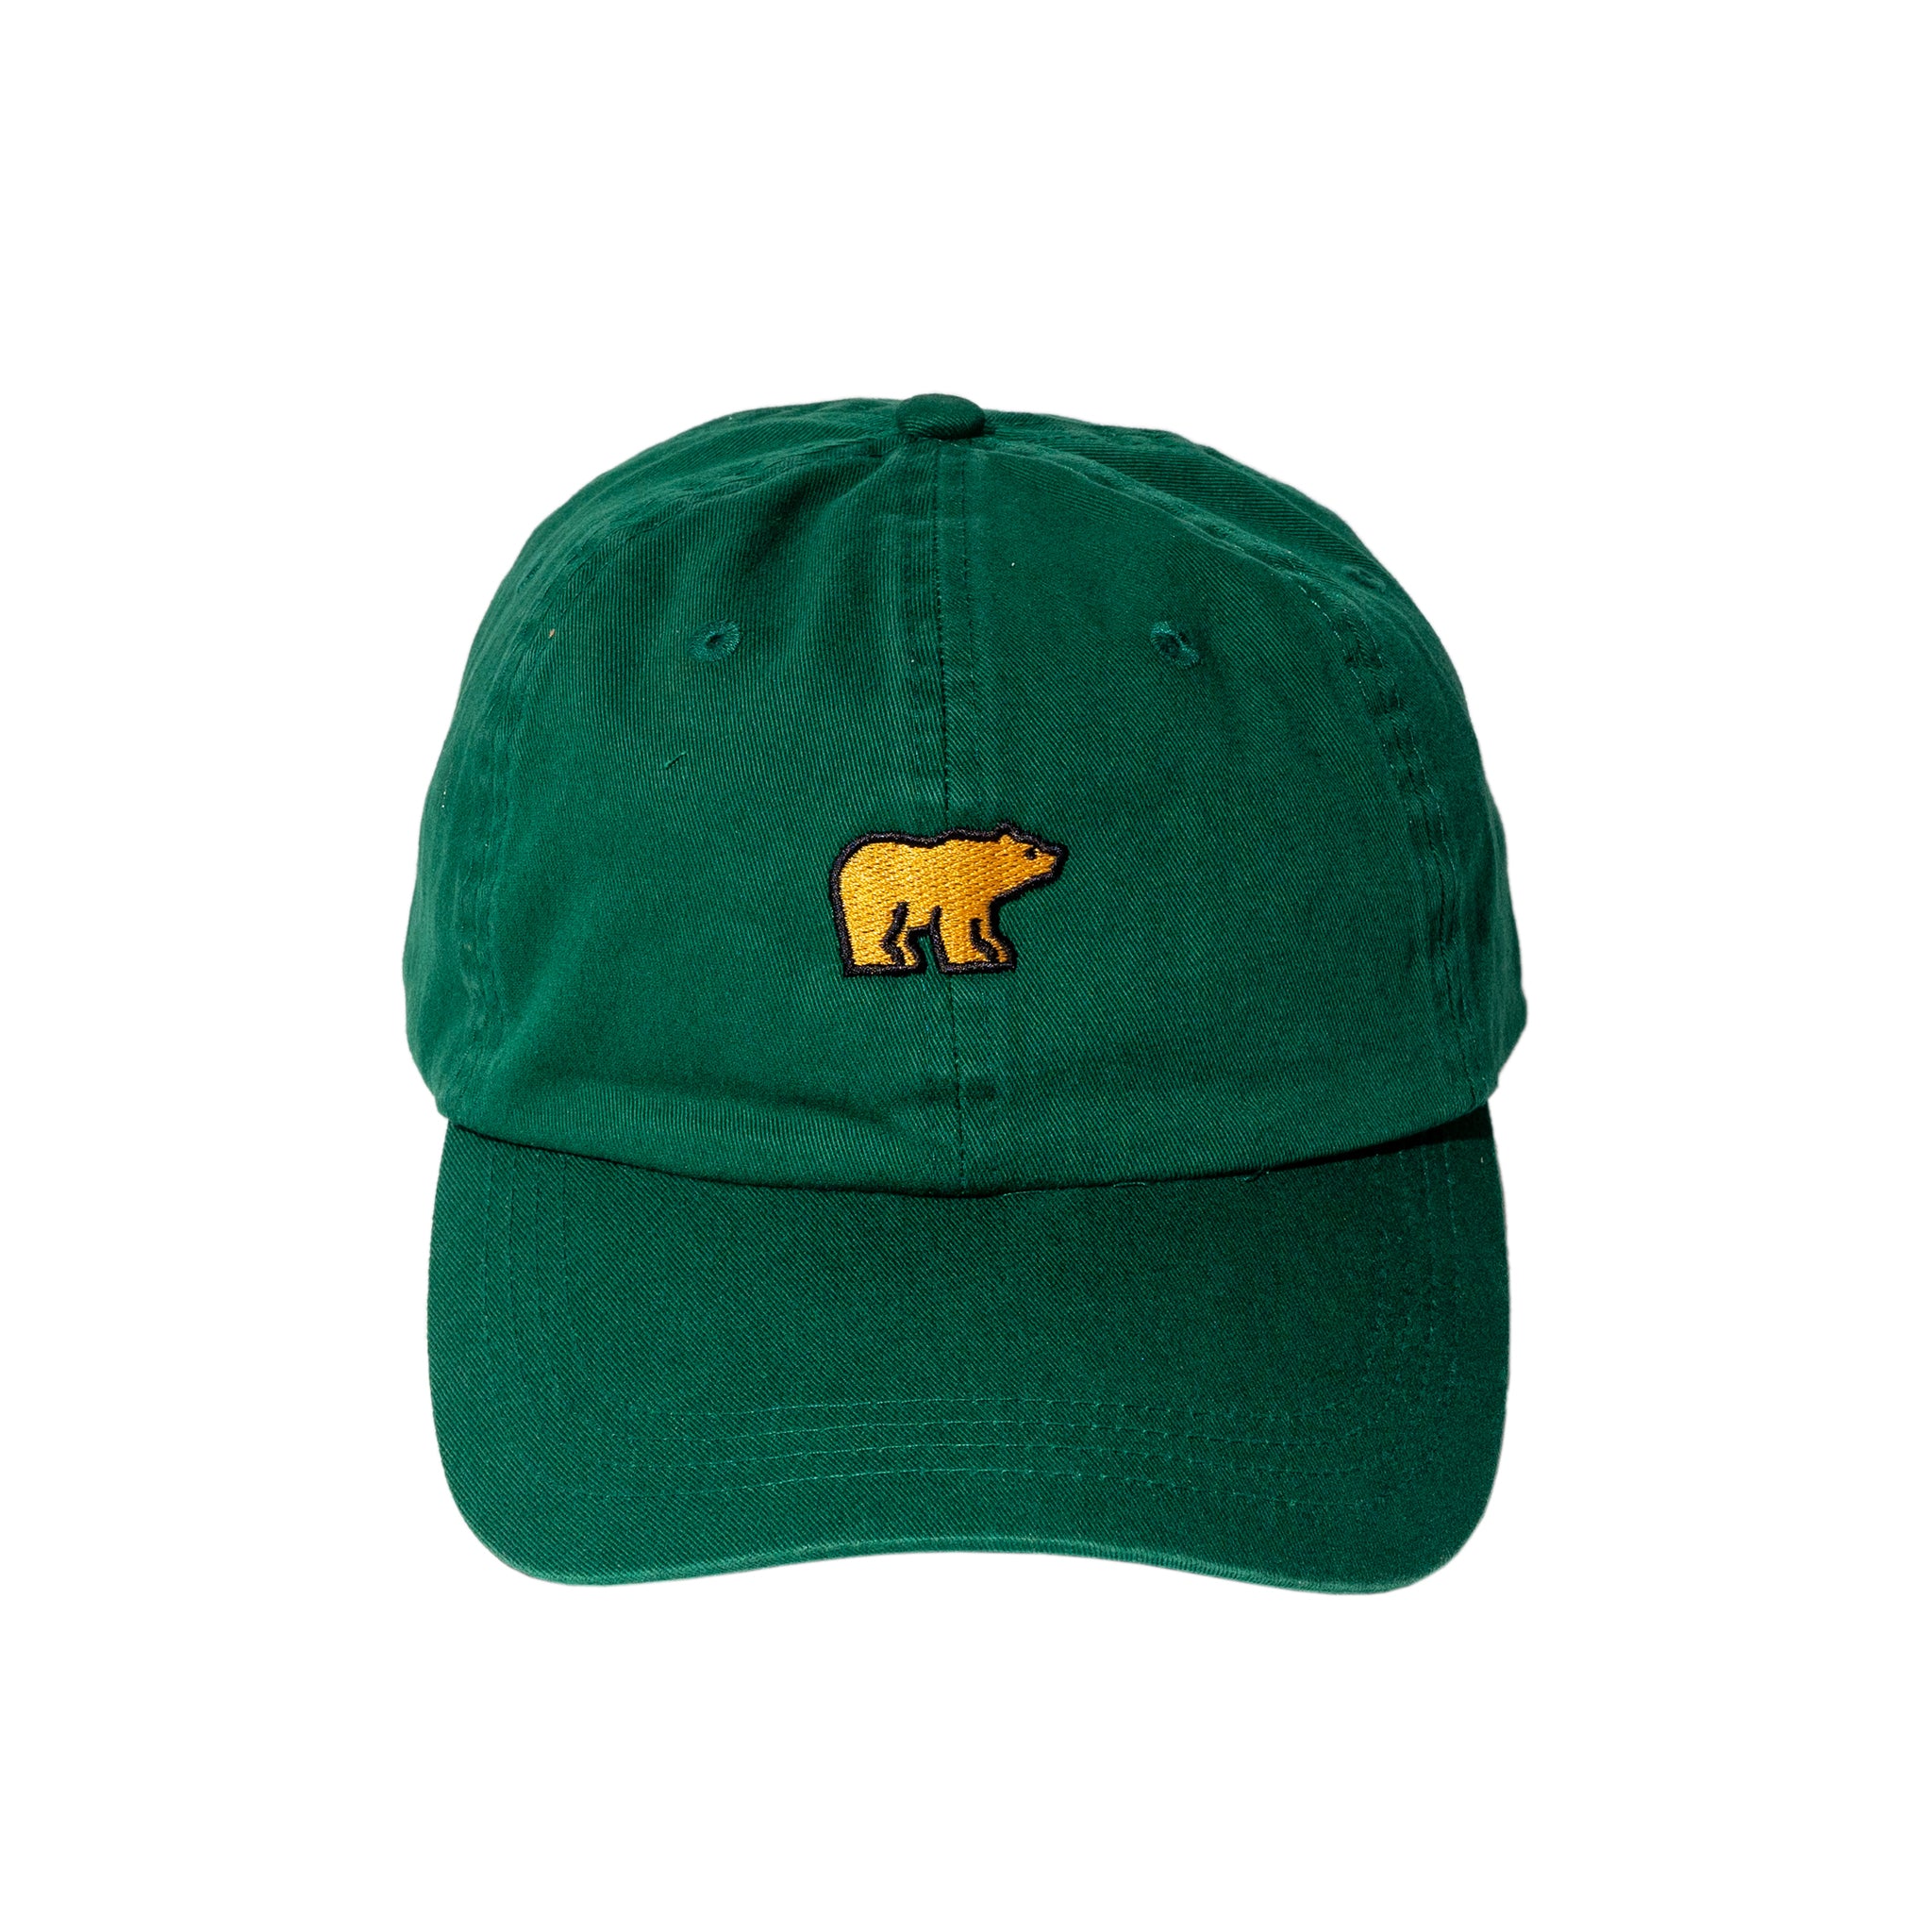 Nicklaus Golden Bear Cap: Limited Edition